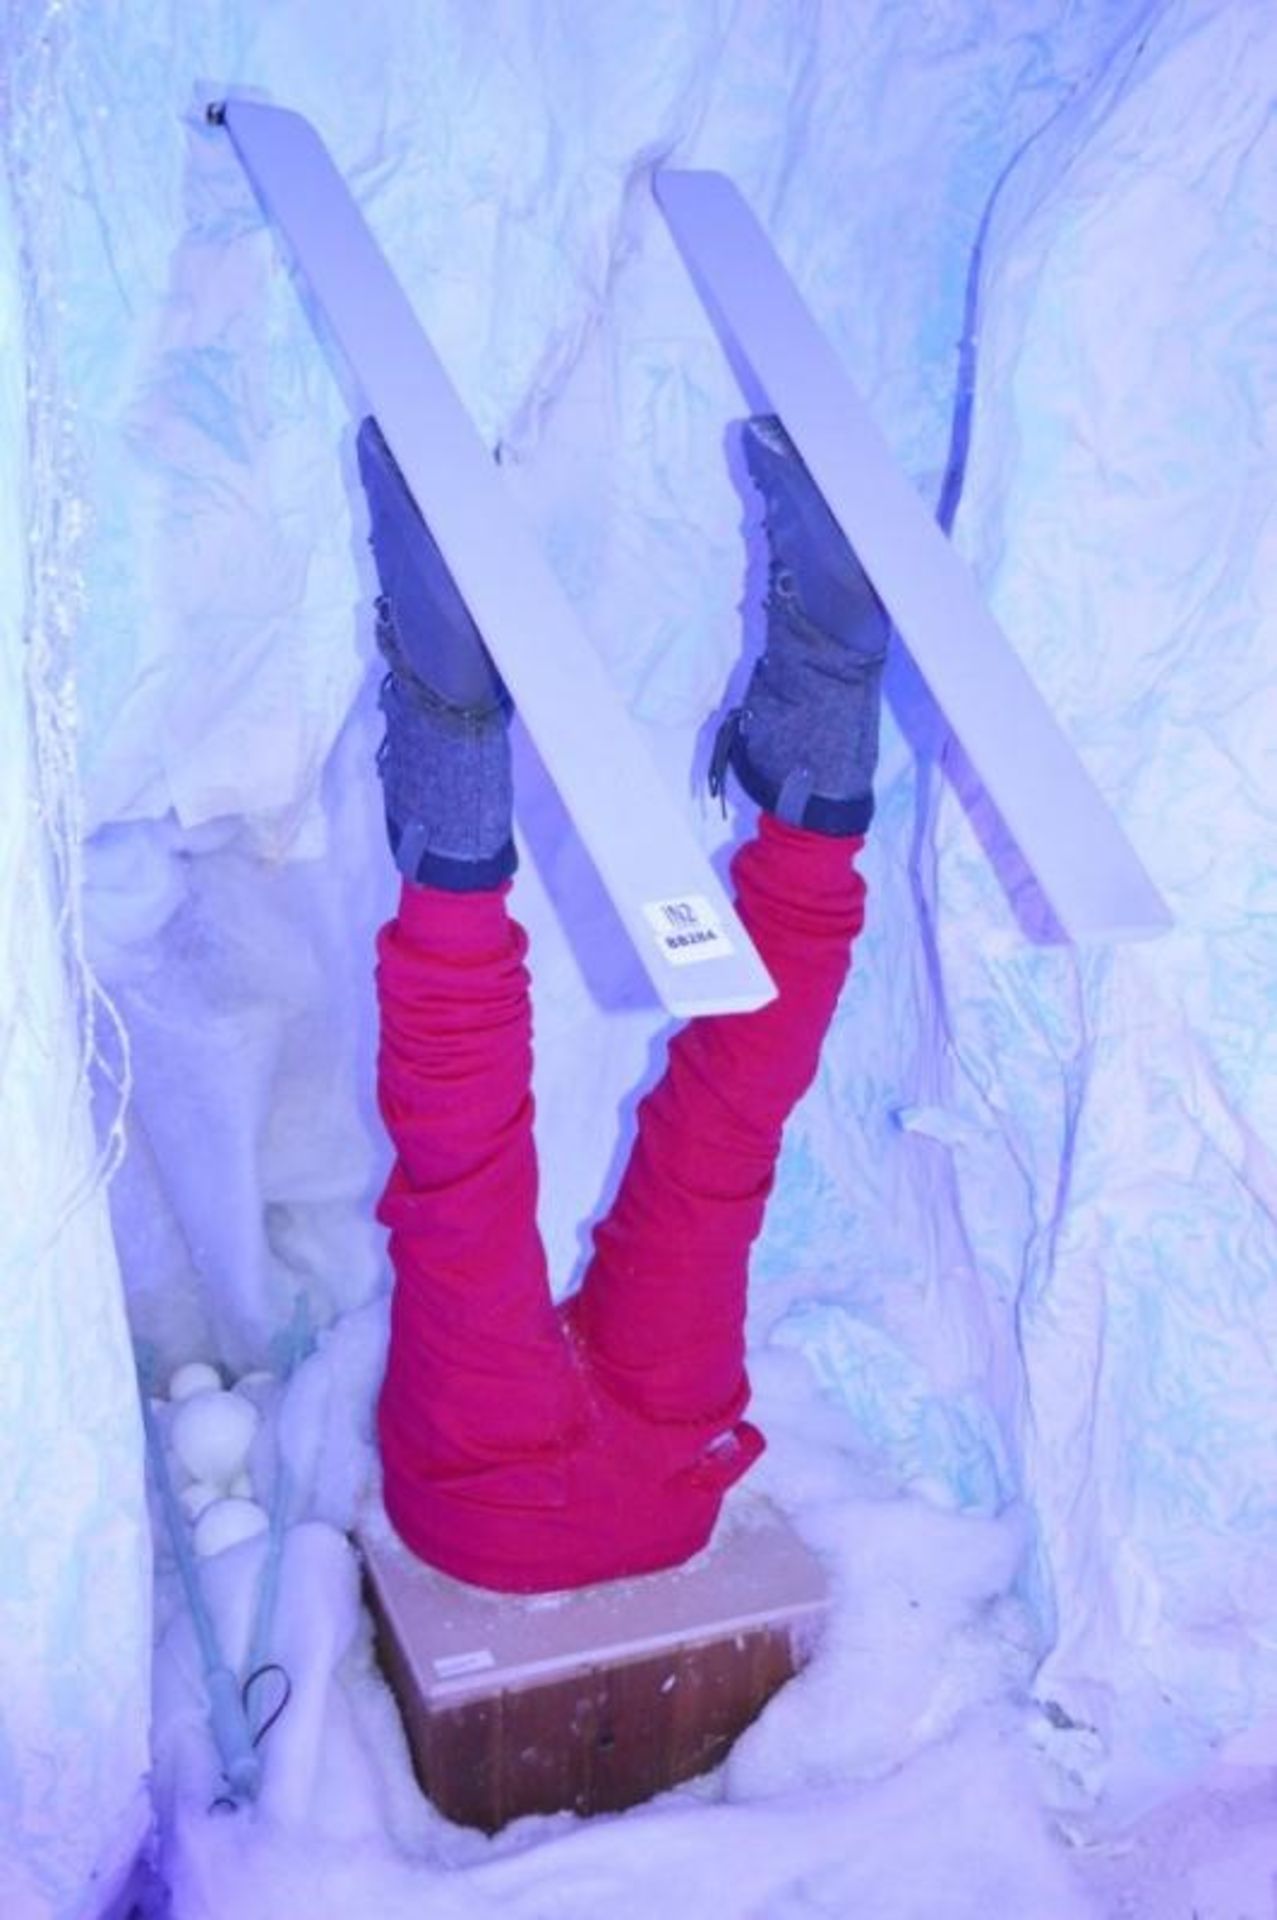 1 x Pair of Upside Down Skiers Legs on Wooden Base - Depicting Stuck in Snow Ski Scene - Image 2 of 2